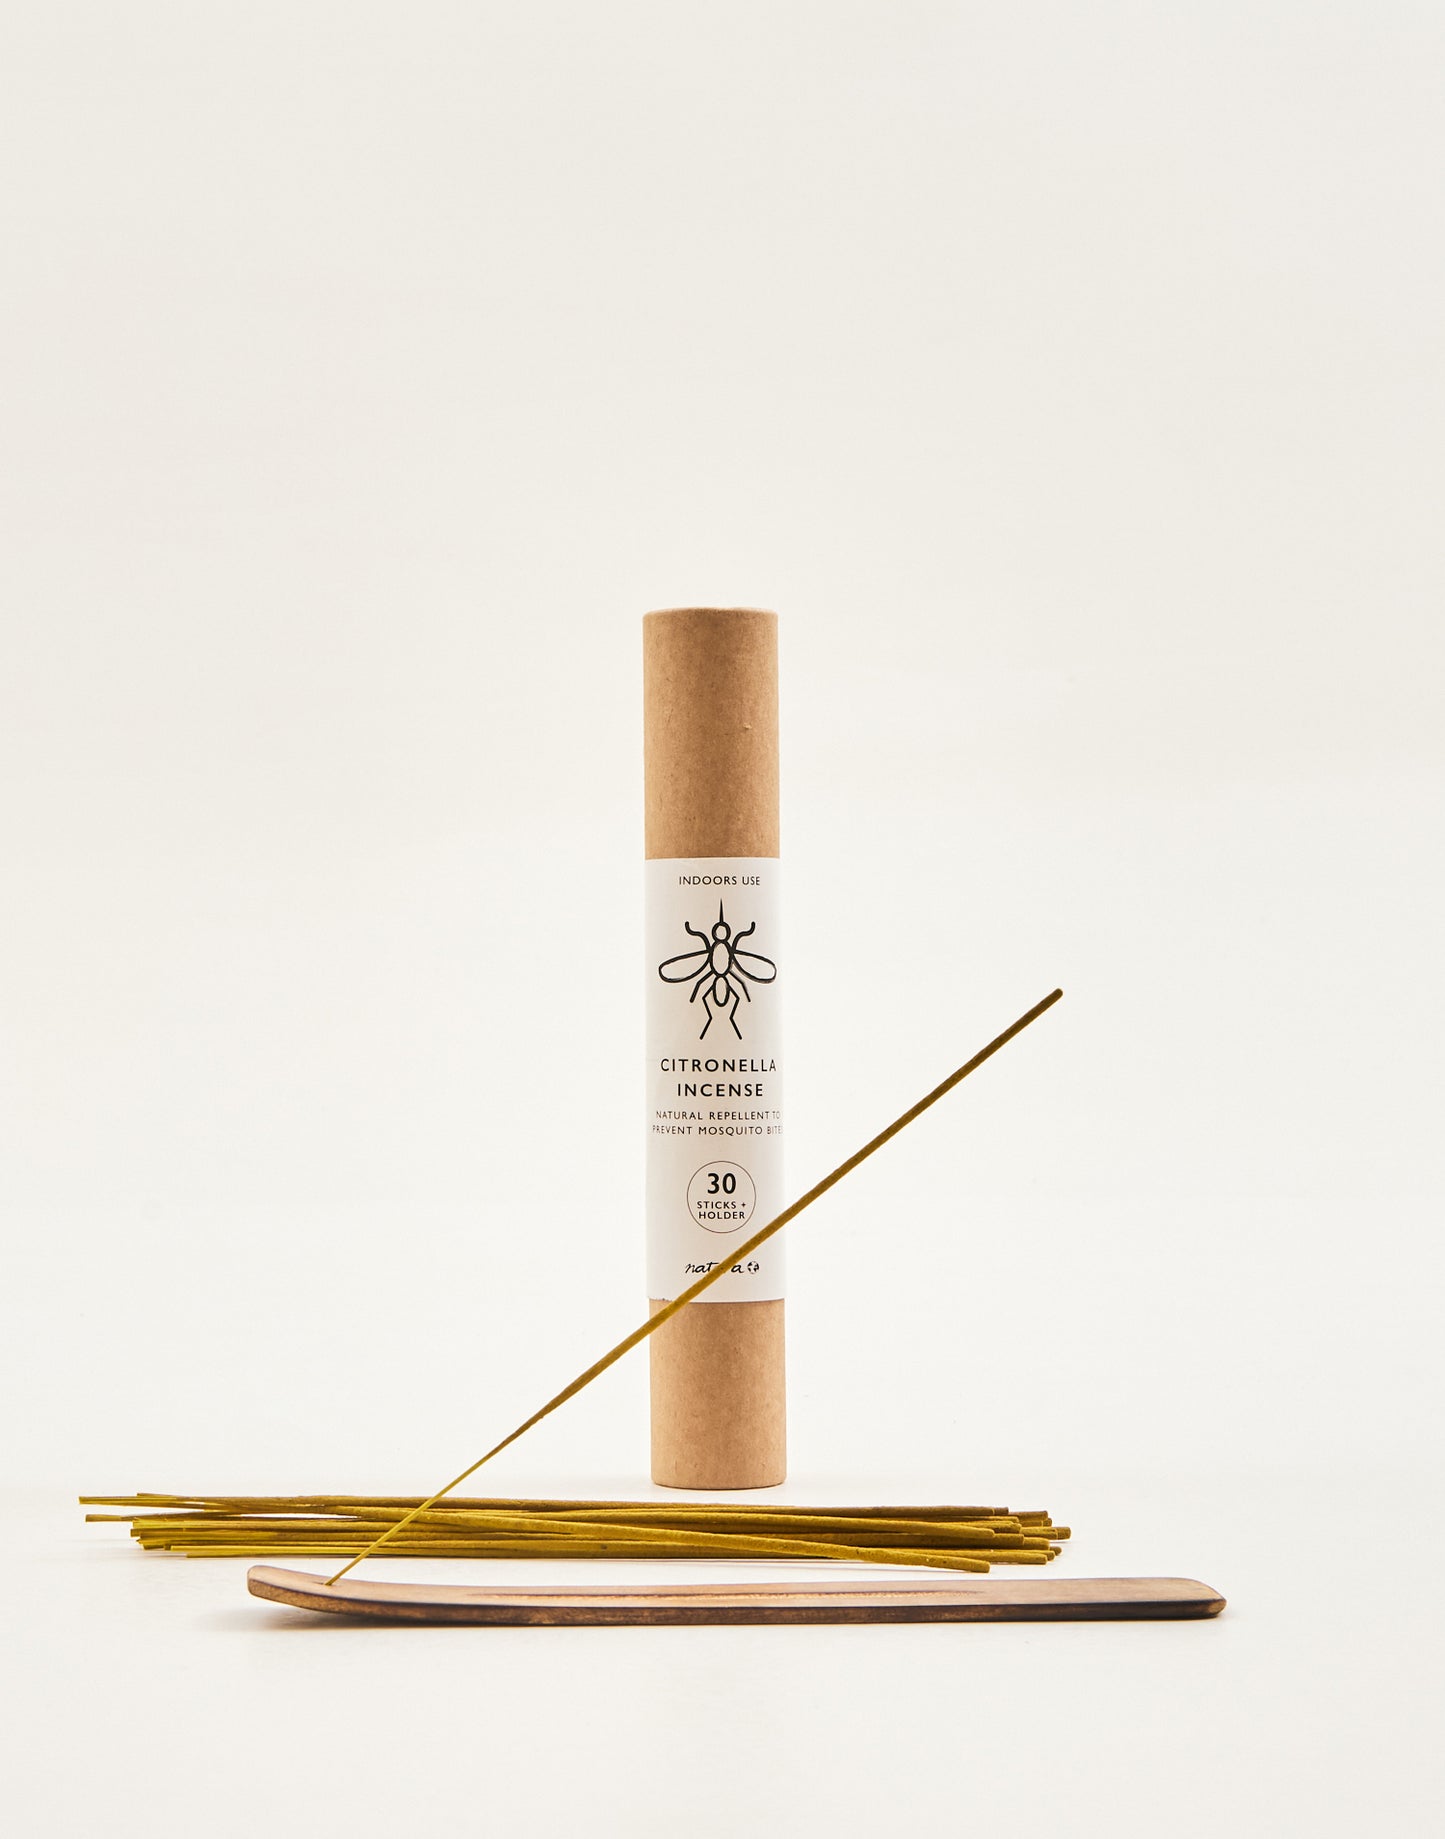 Citronella incense stick with holder